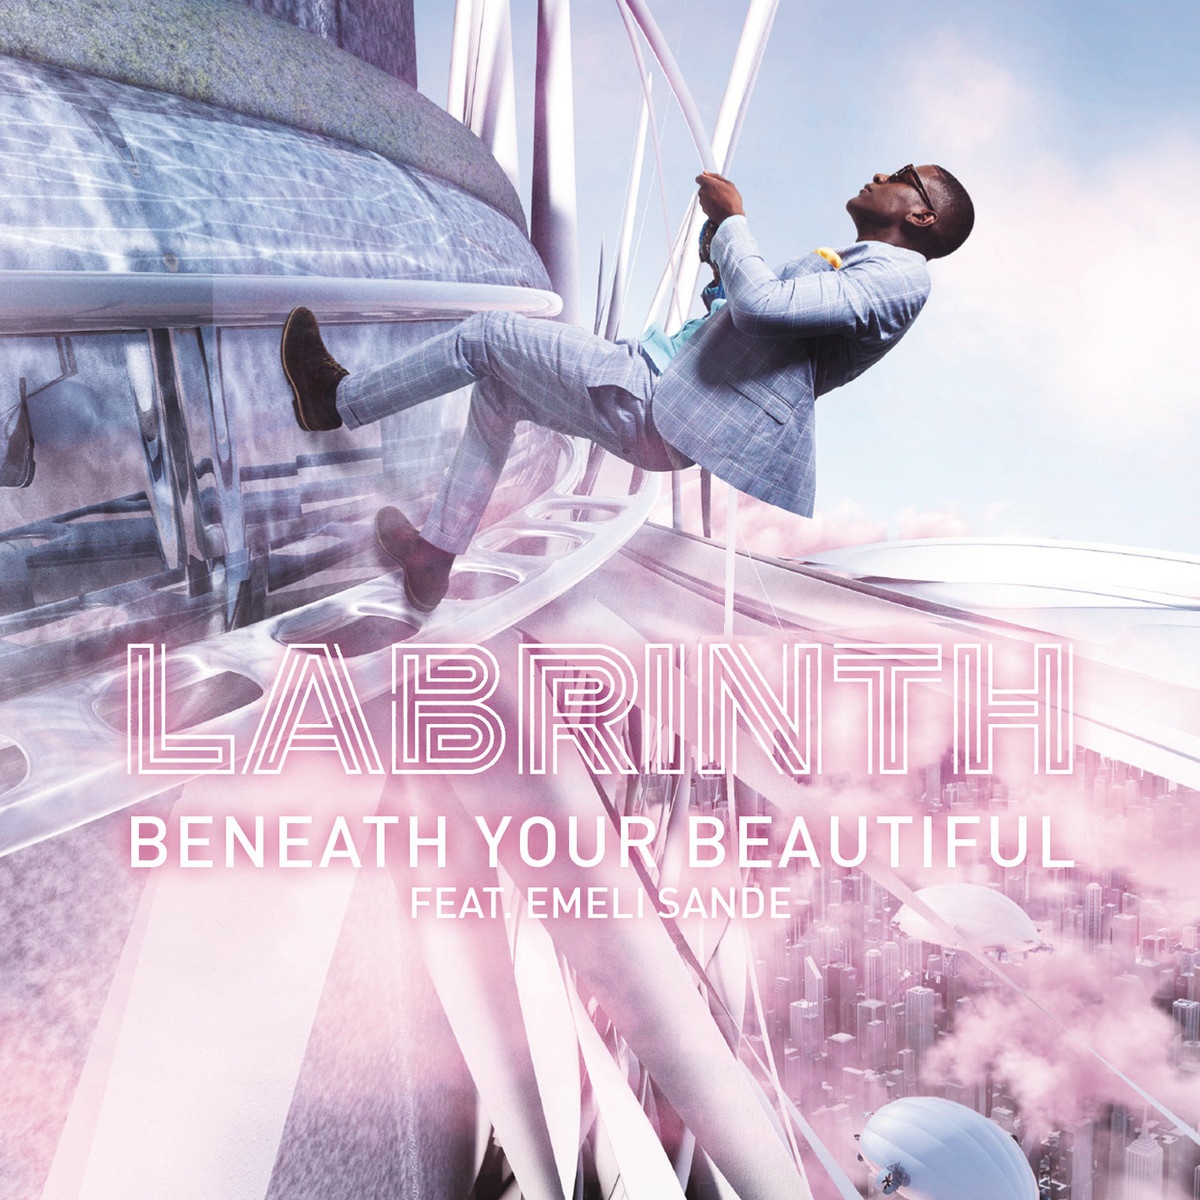 Beneath Your Beautiful feat. Emeli Sande  Rollz Remix Extended Version